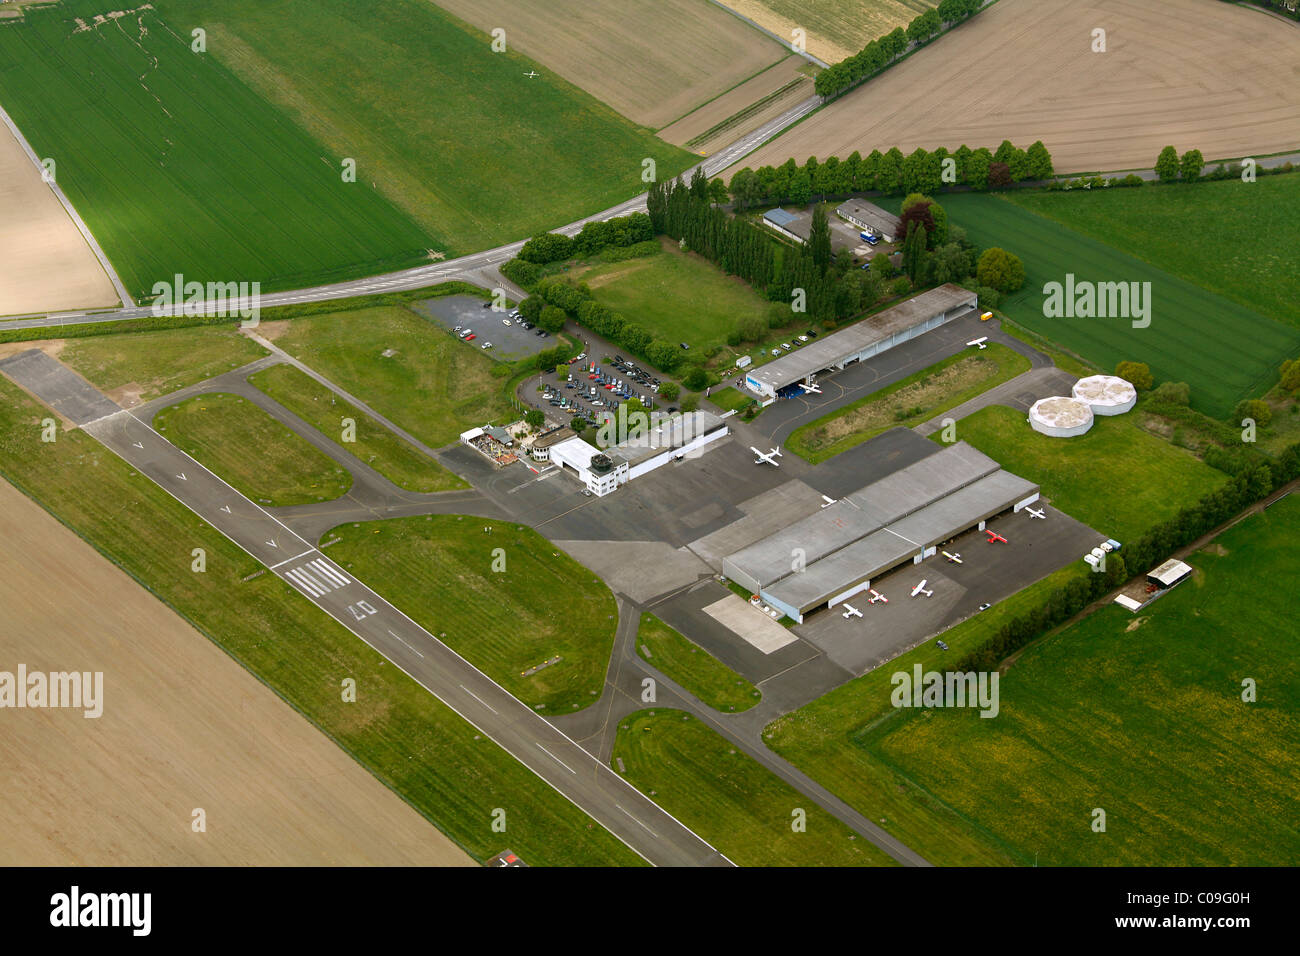 Vista aerea, hangar aereo, aviazione generale airfield, airfield pista EDLM Marl, Marl, Ruhrgebiet regione Foto Stock